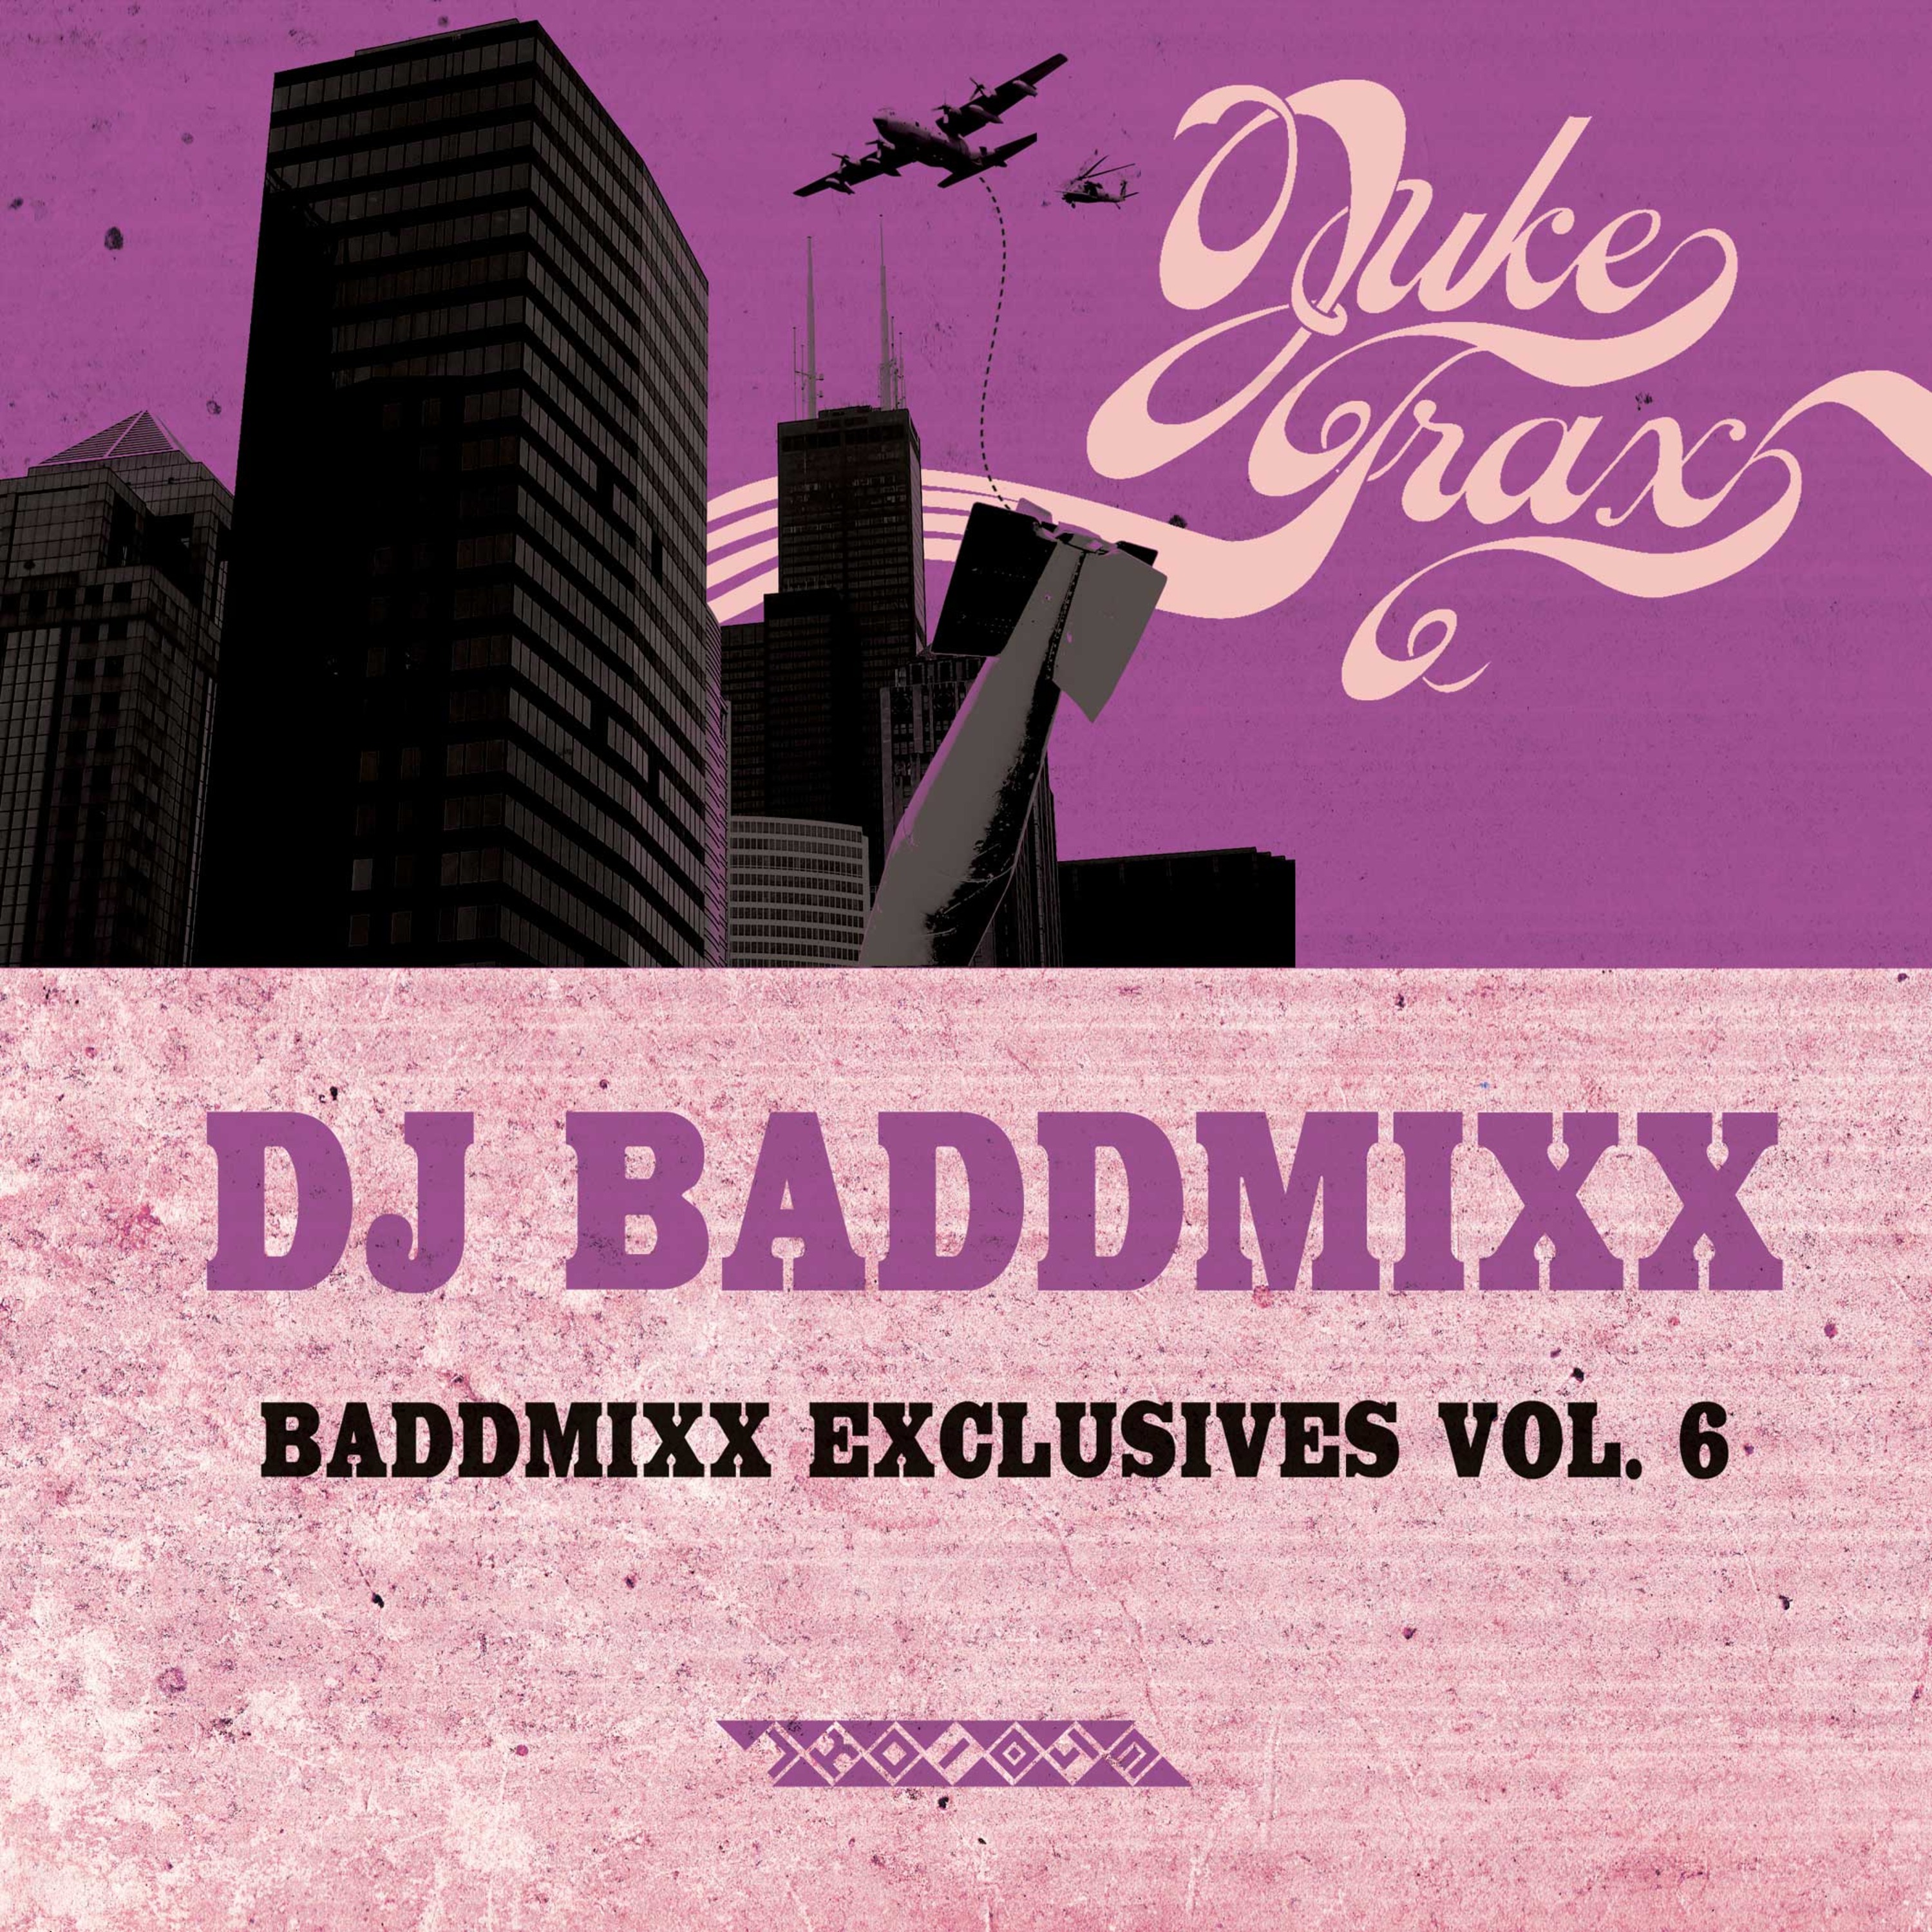 Baddmixx Exclusives Vol.6